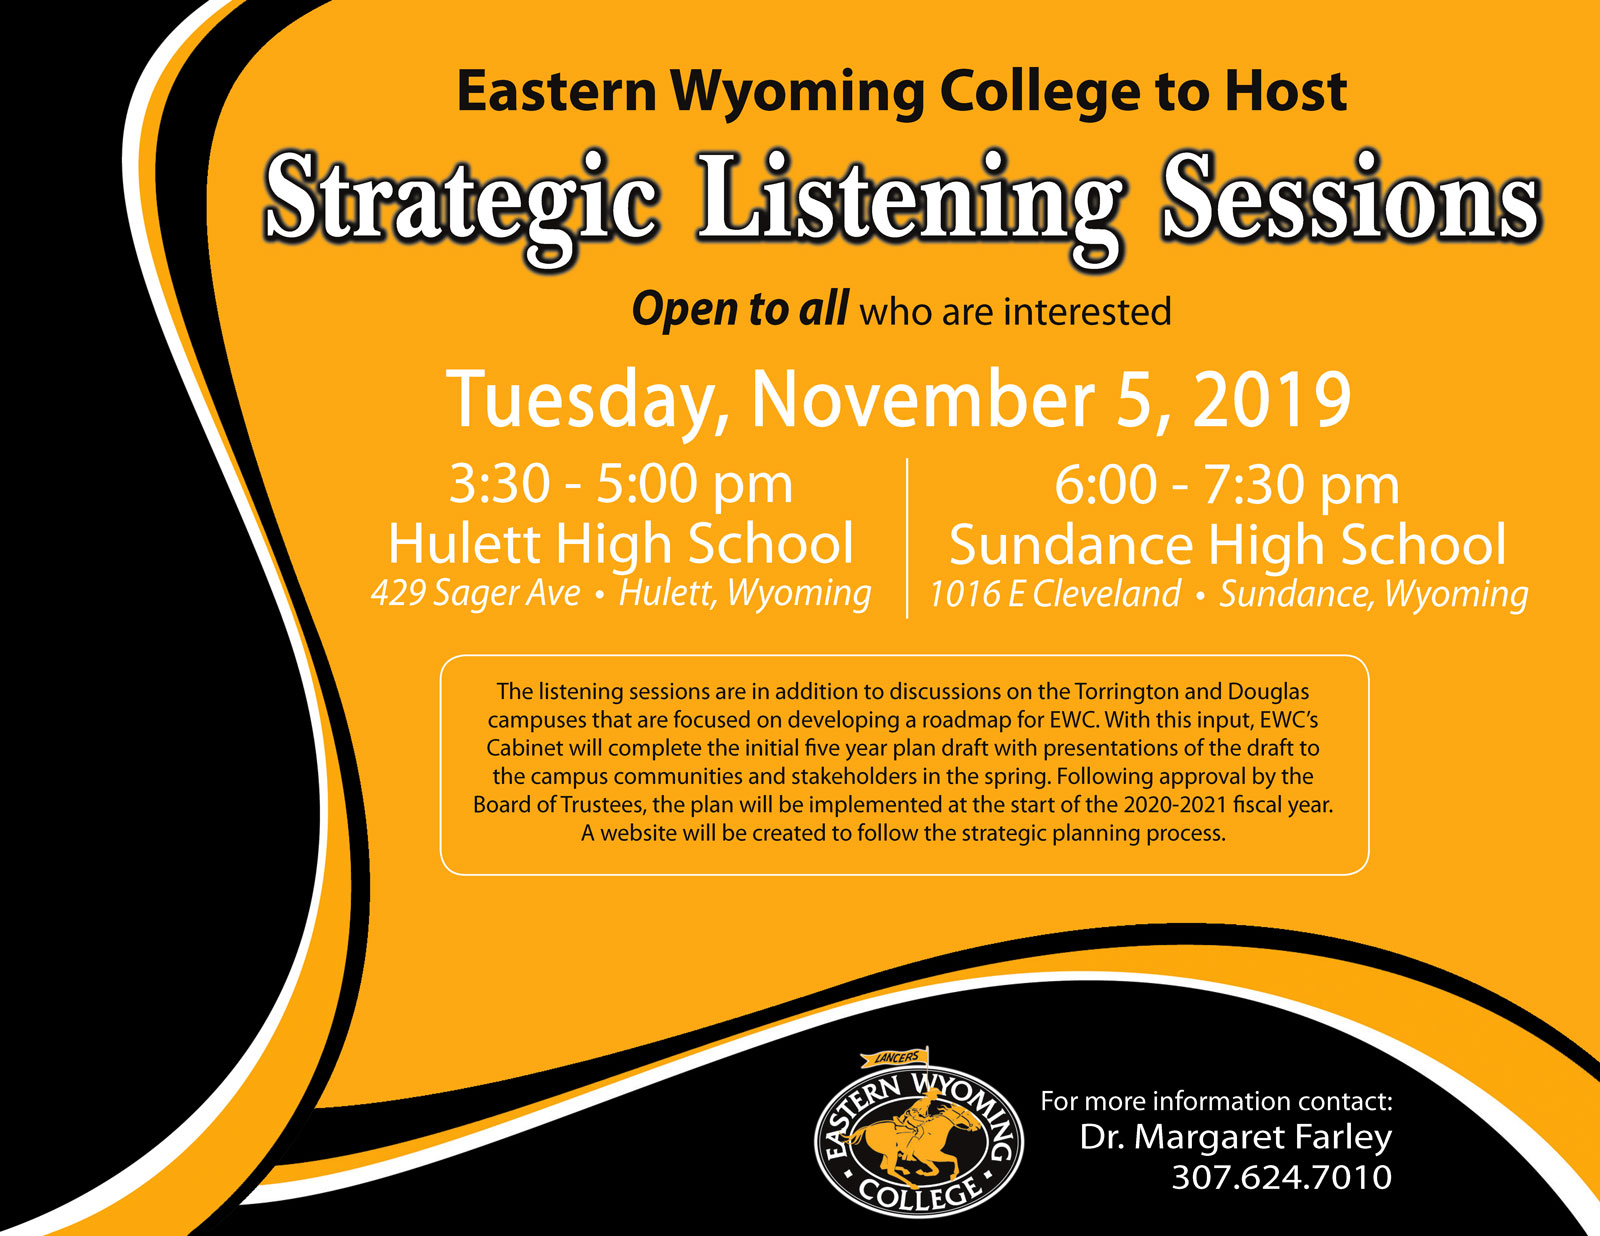 EWC Strategic Listening Sessions - Hulett & Sundance, Wyoming